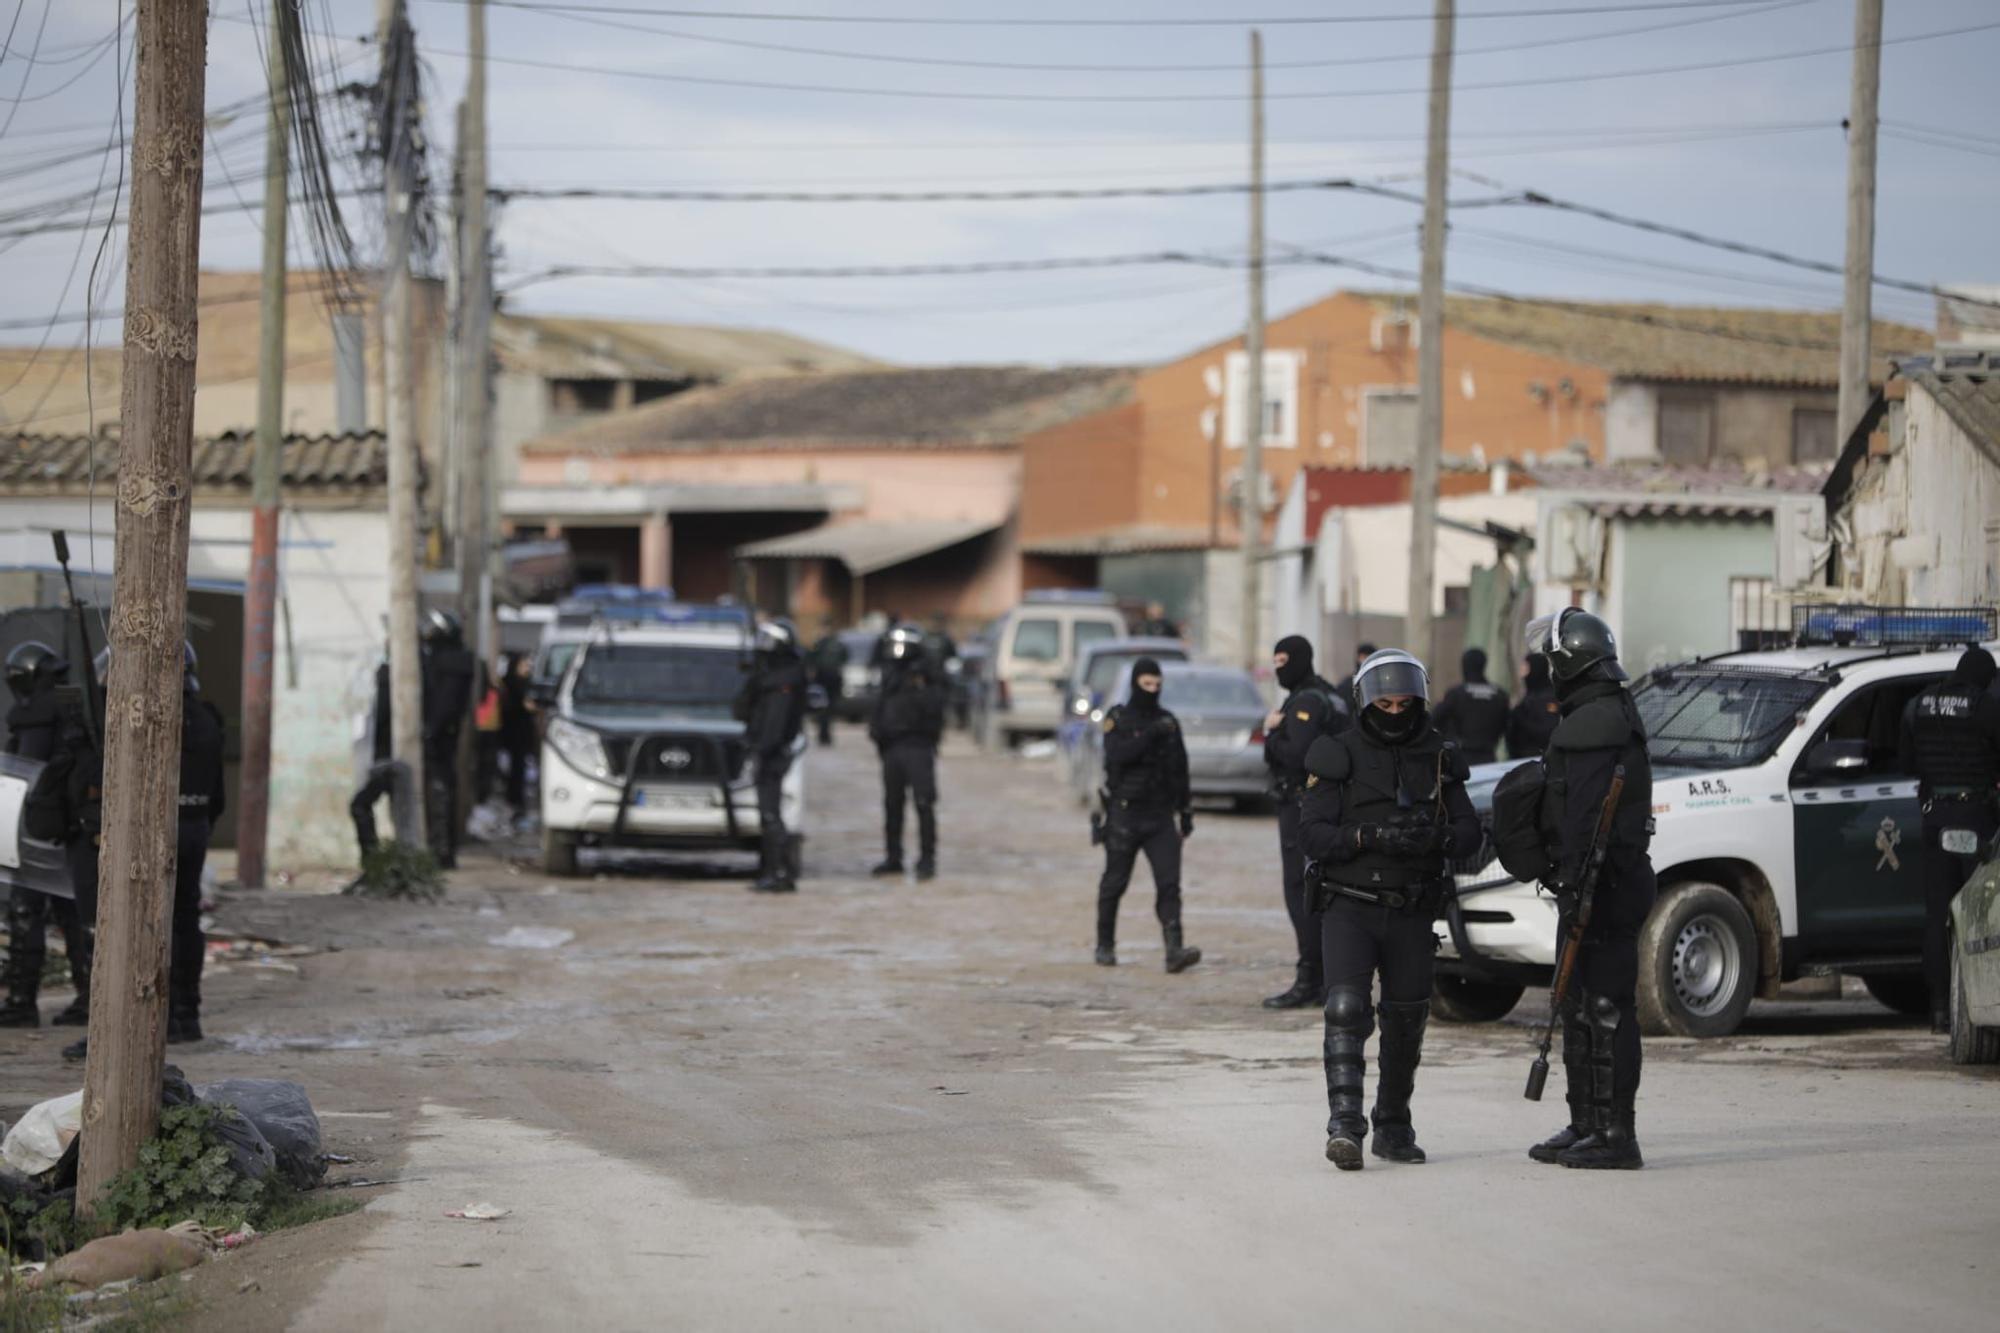 La Guardia Civil toma Son Banya en la gran operación antidroga de Mallorca